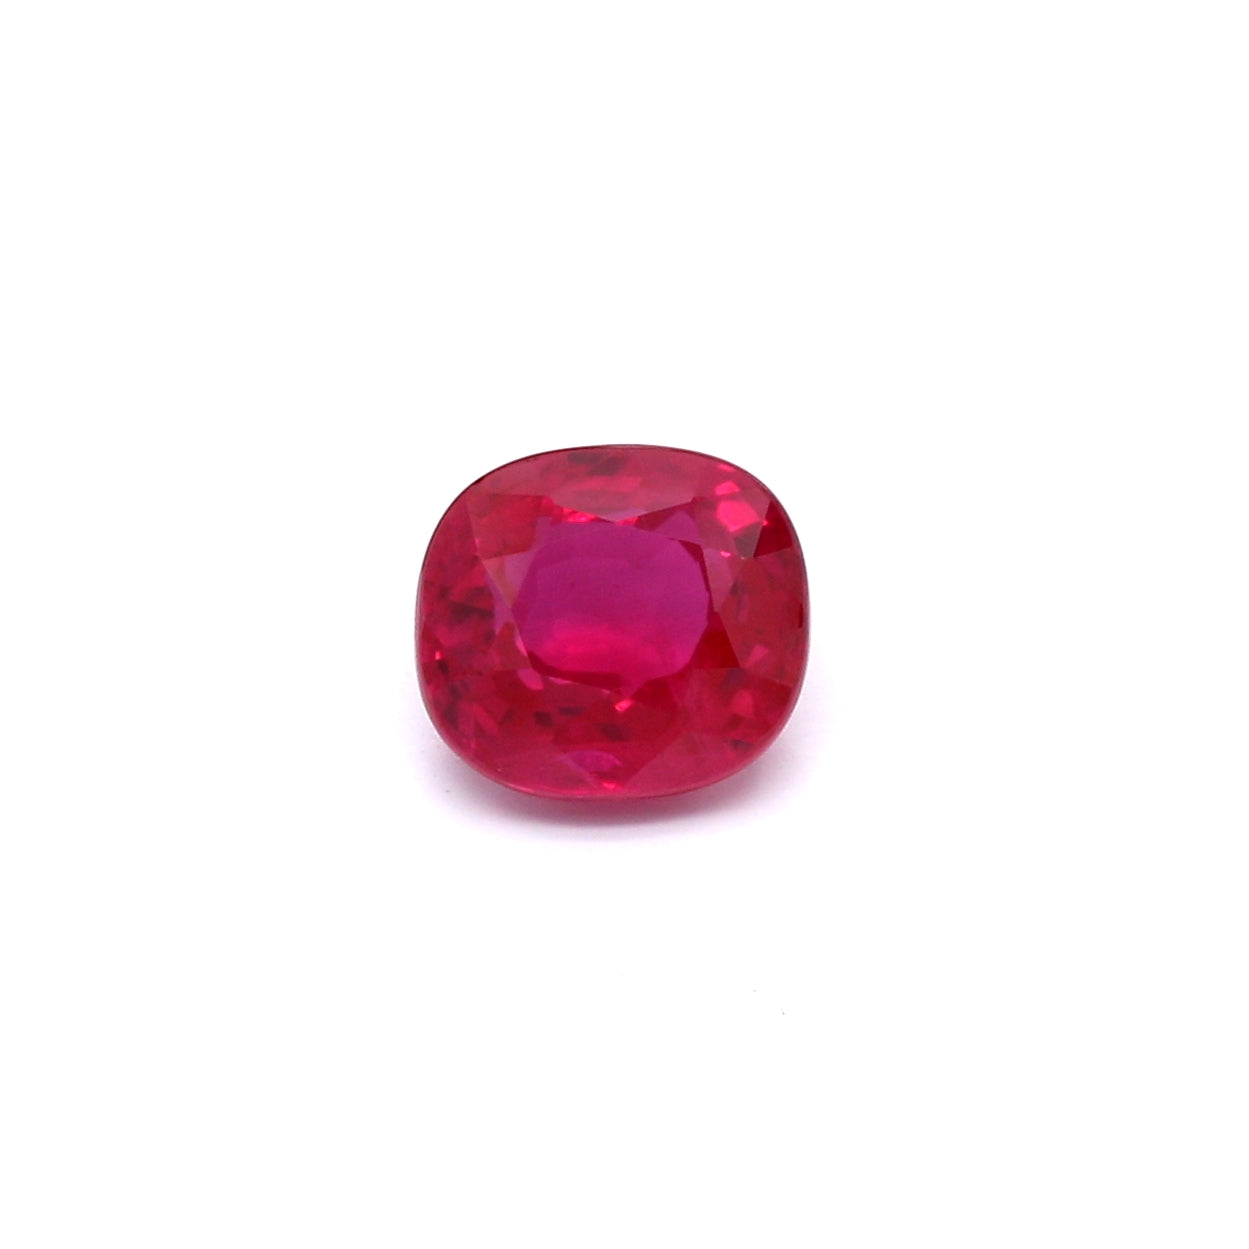 1.74ct Pinkish Red, Cushion Ruby, H(a), Myanmar - 6.91 x 6.22 x 4.13mm